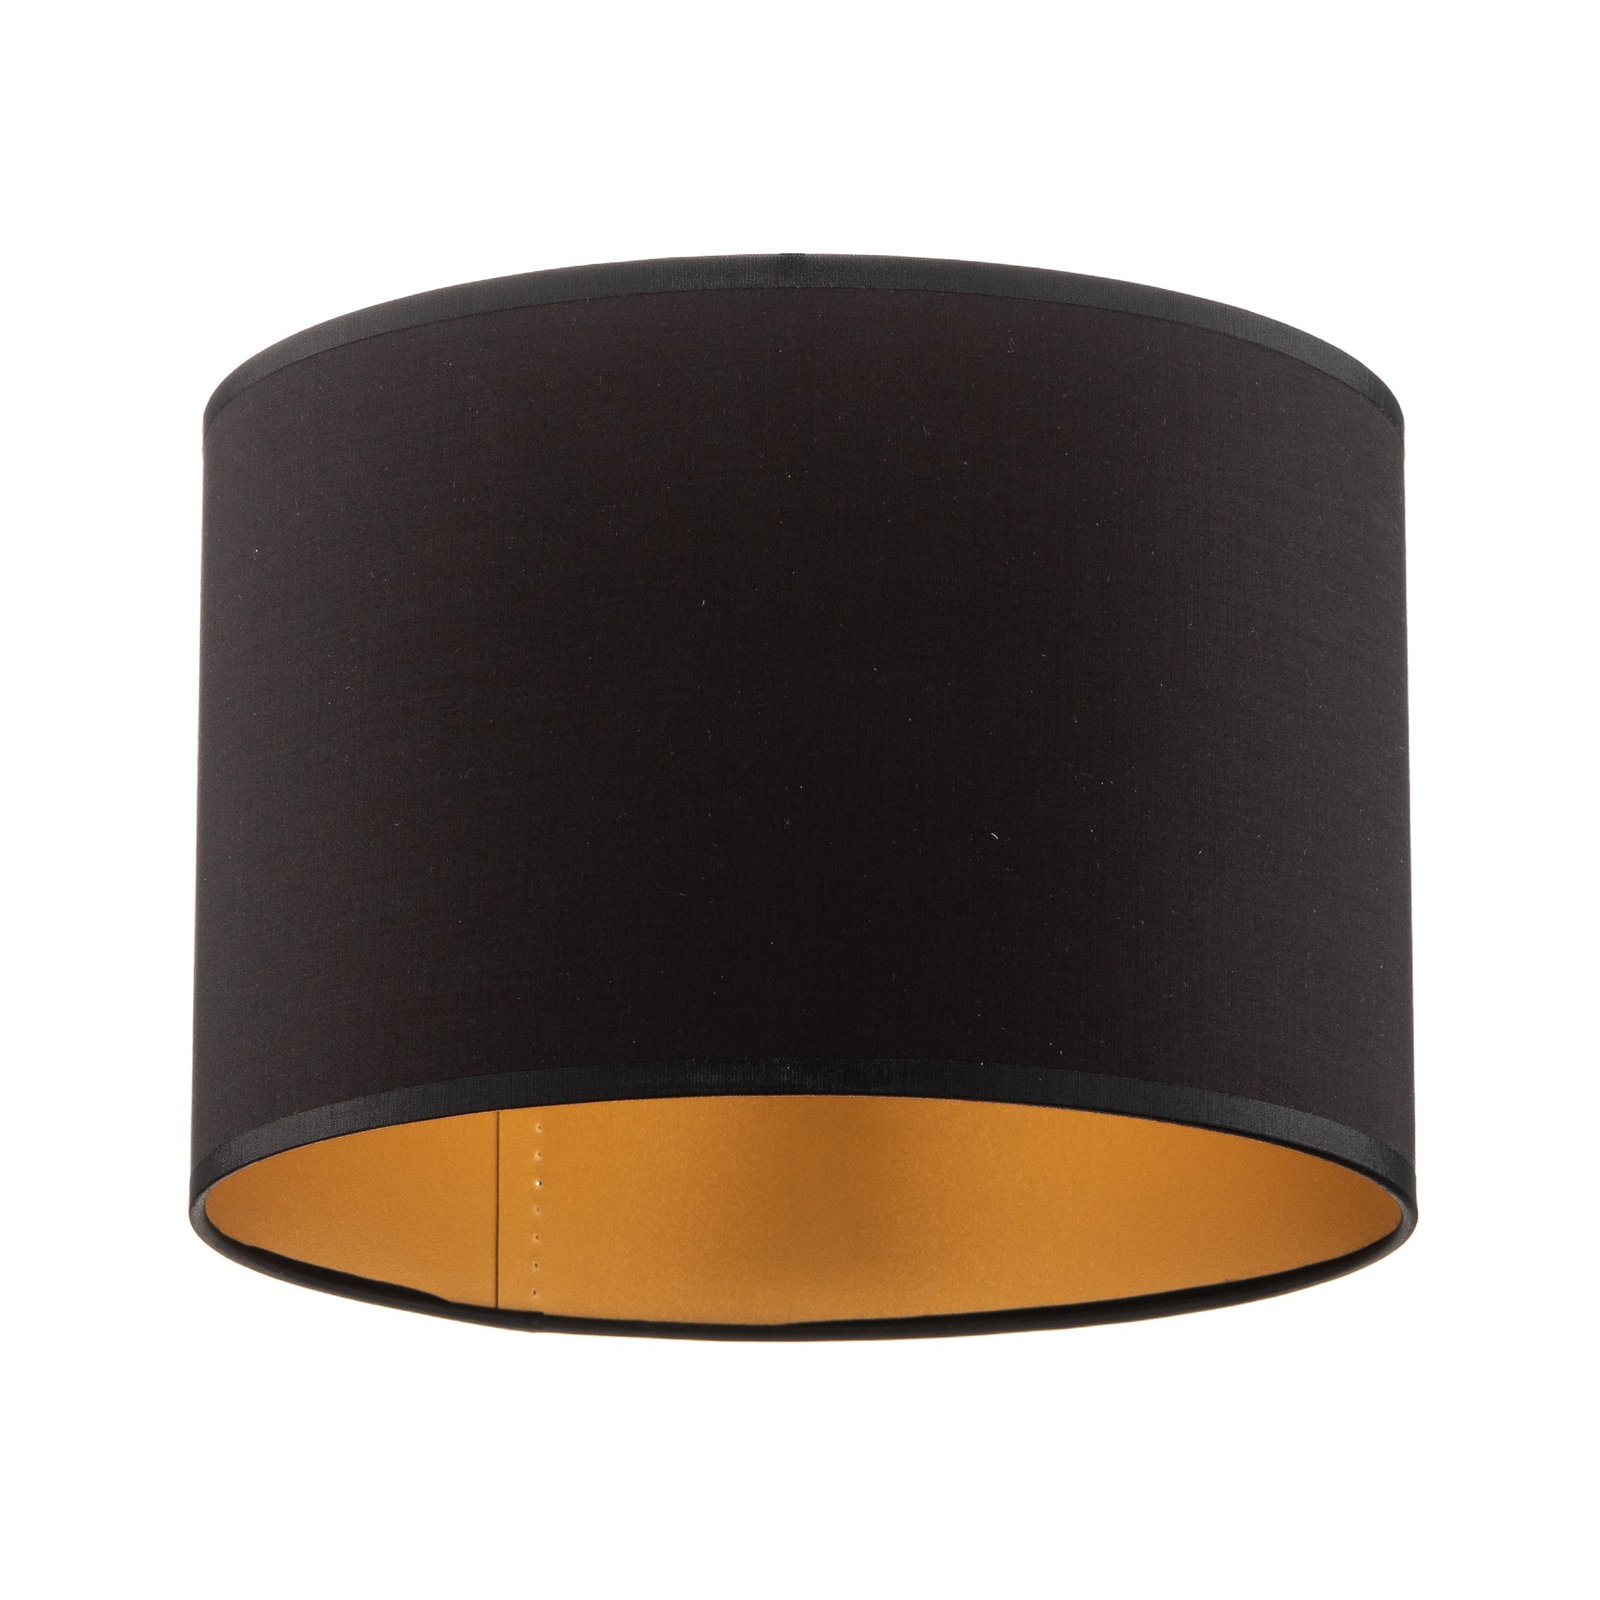 Textile shade for Soho wall light, black/gold